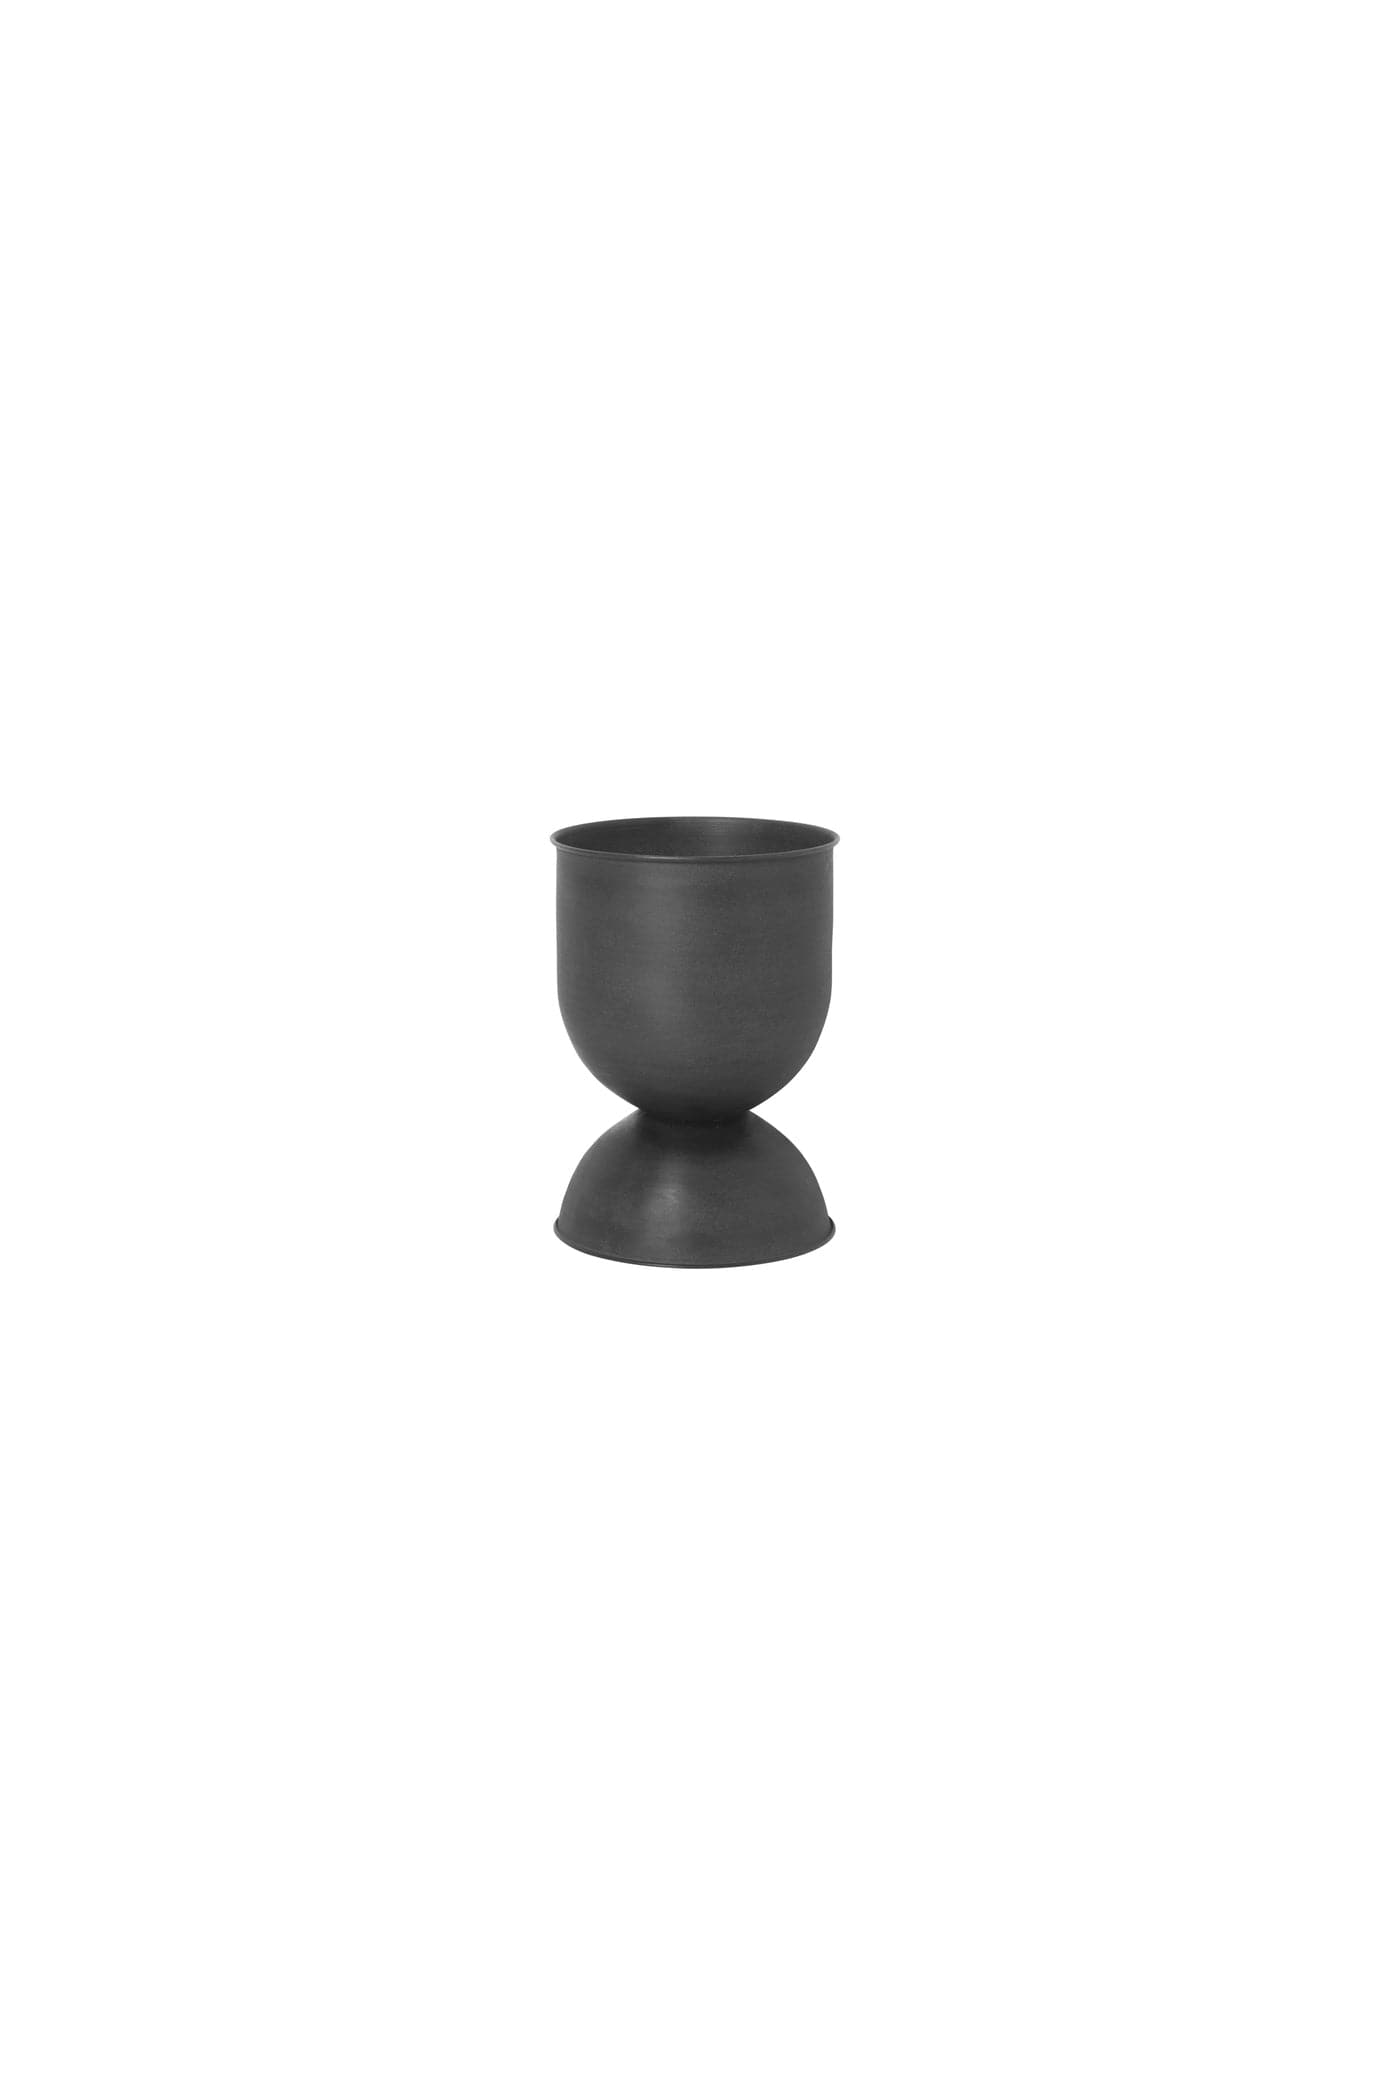 Ferm - Hourglass Pot - Small - Black